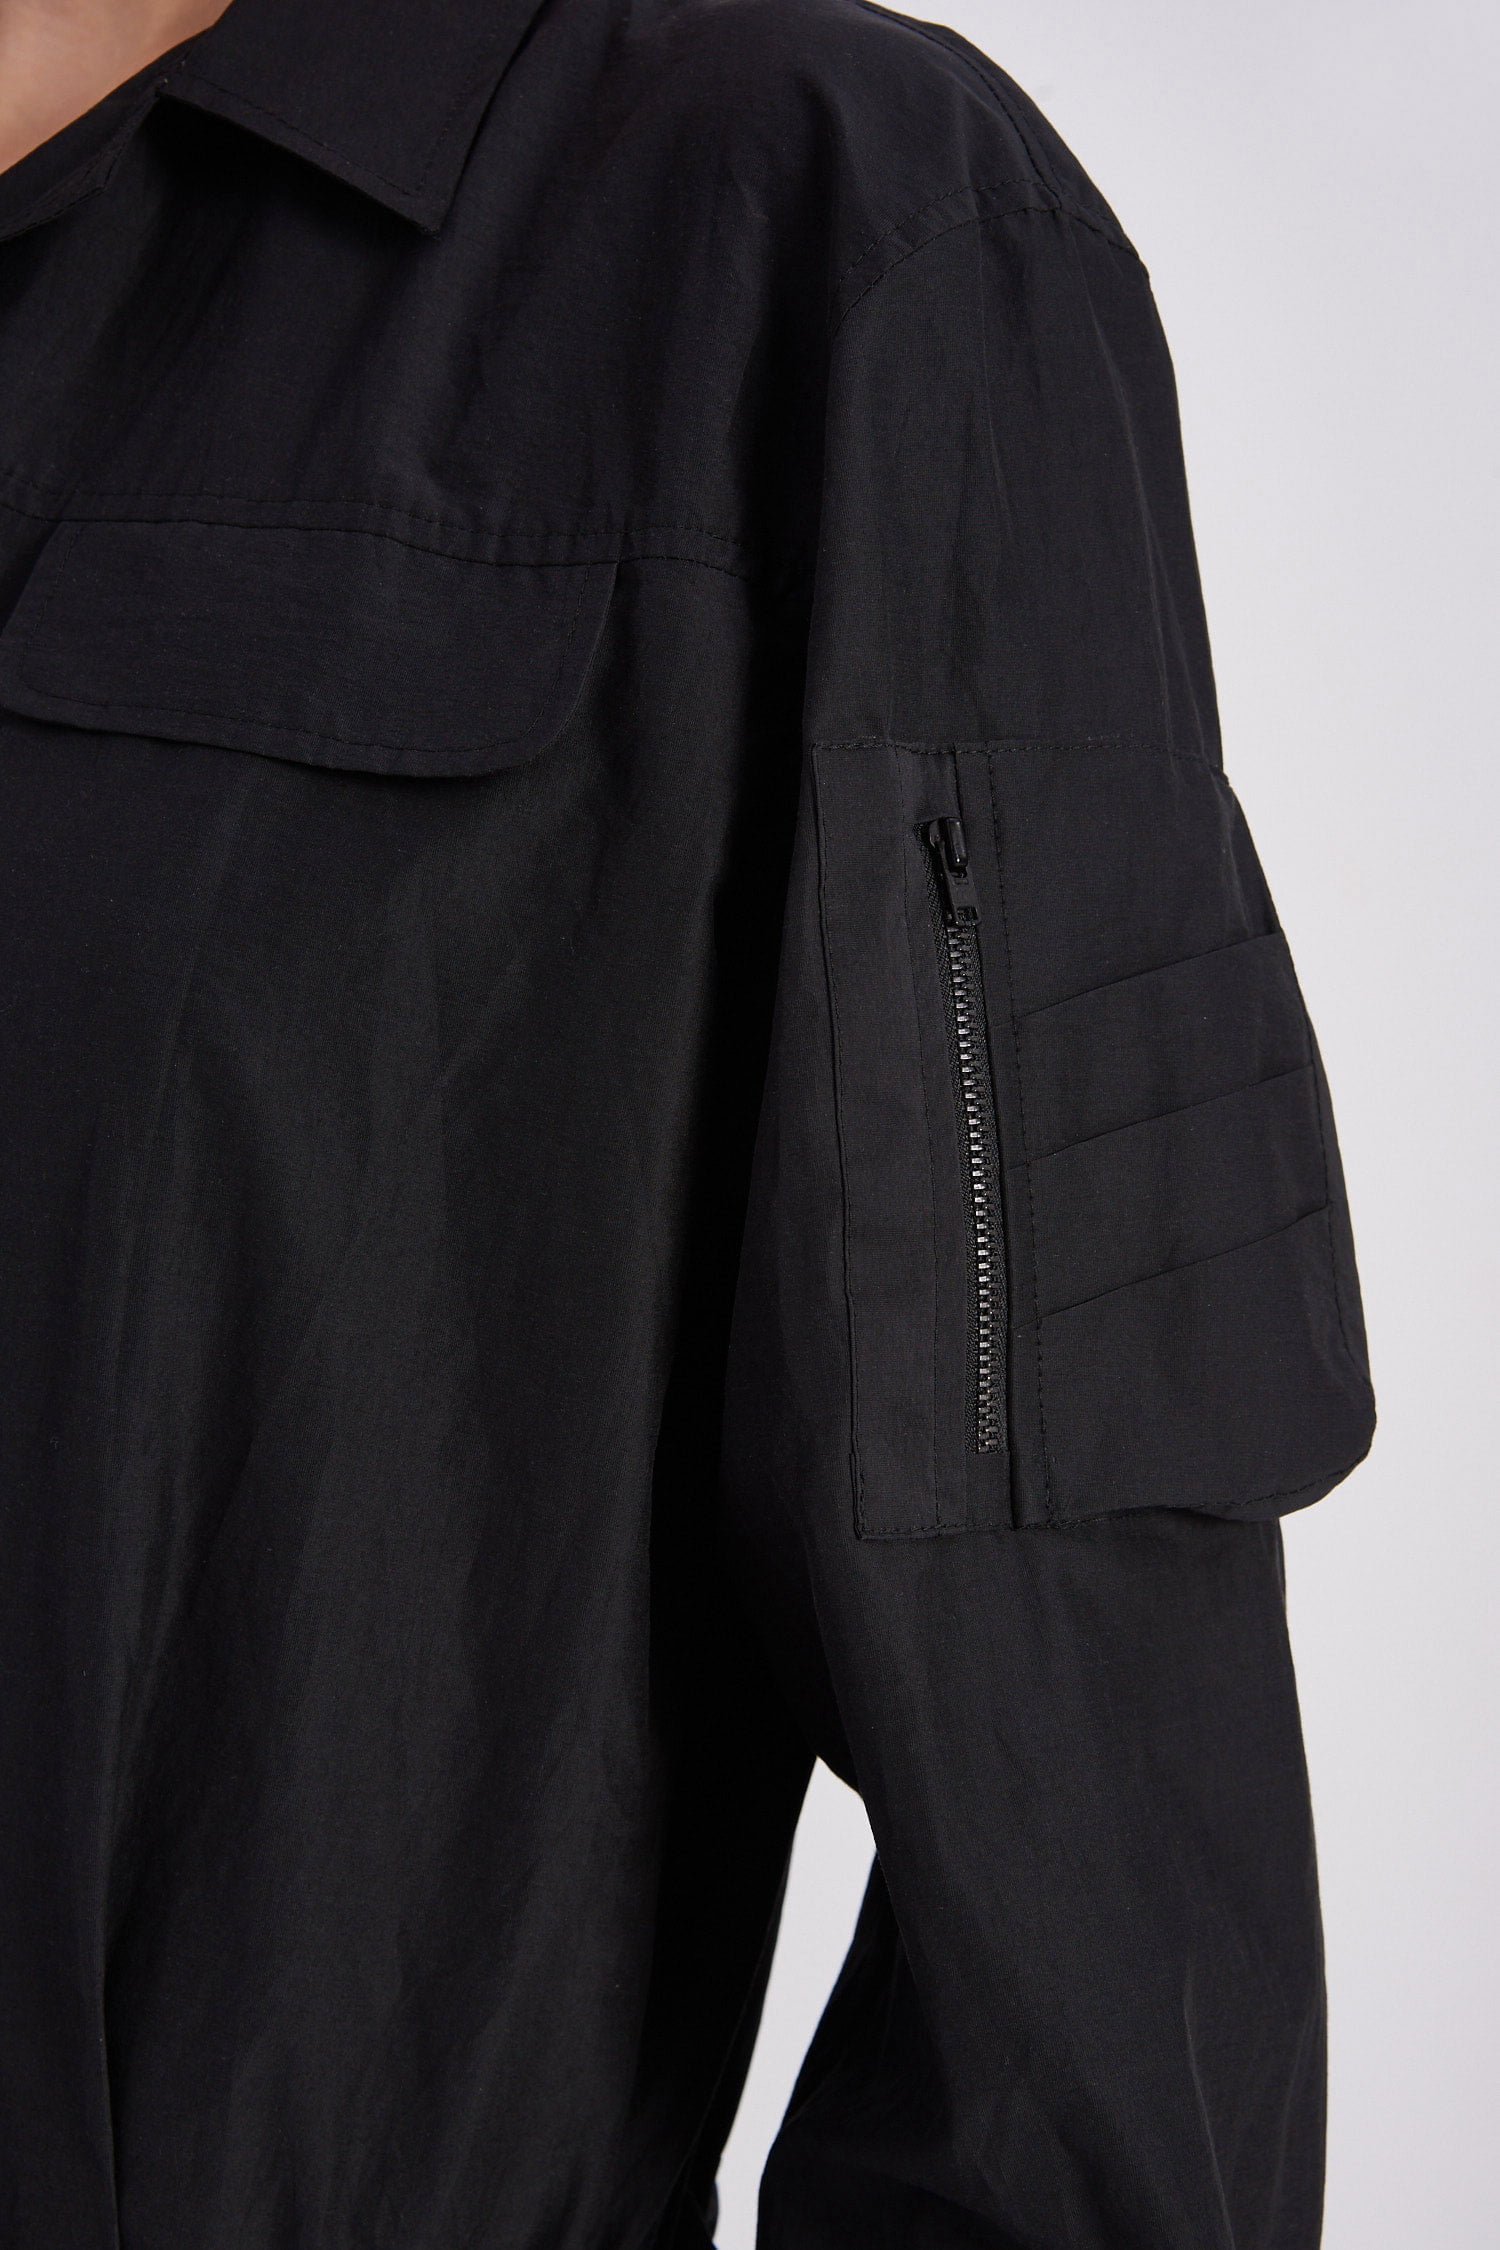 Acephala Fw2021 22 Black Jumpsuit 045